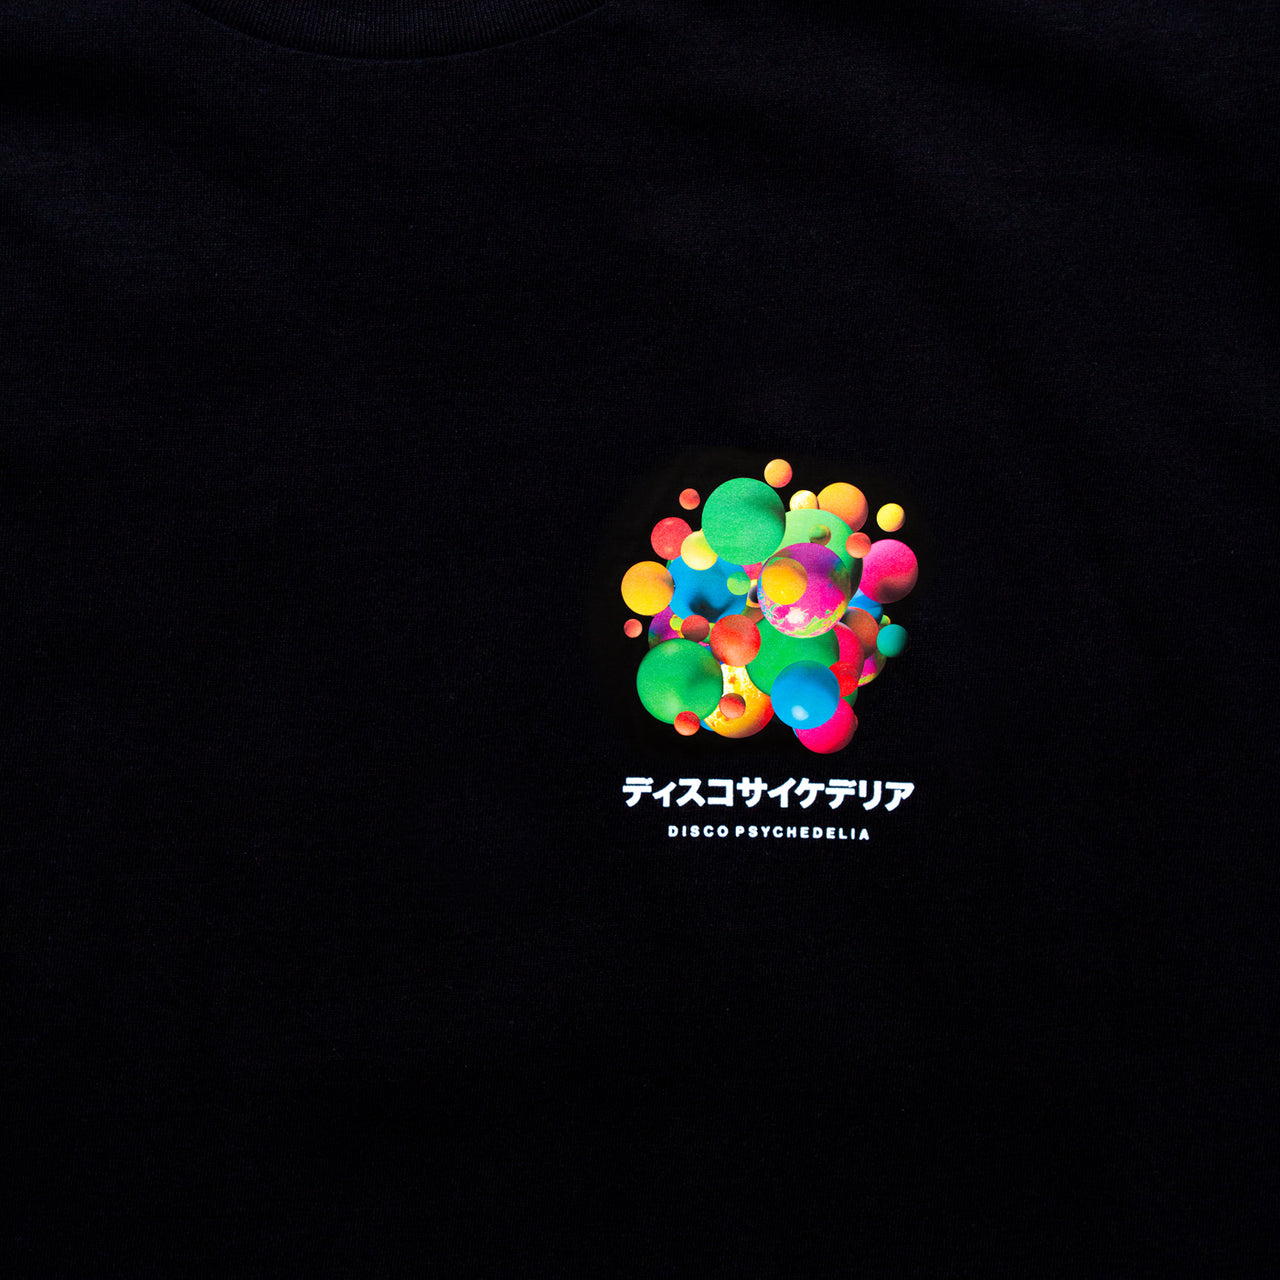 Crest Orb 006 - Tshirt - Black